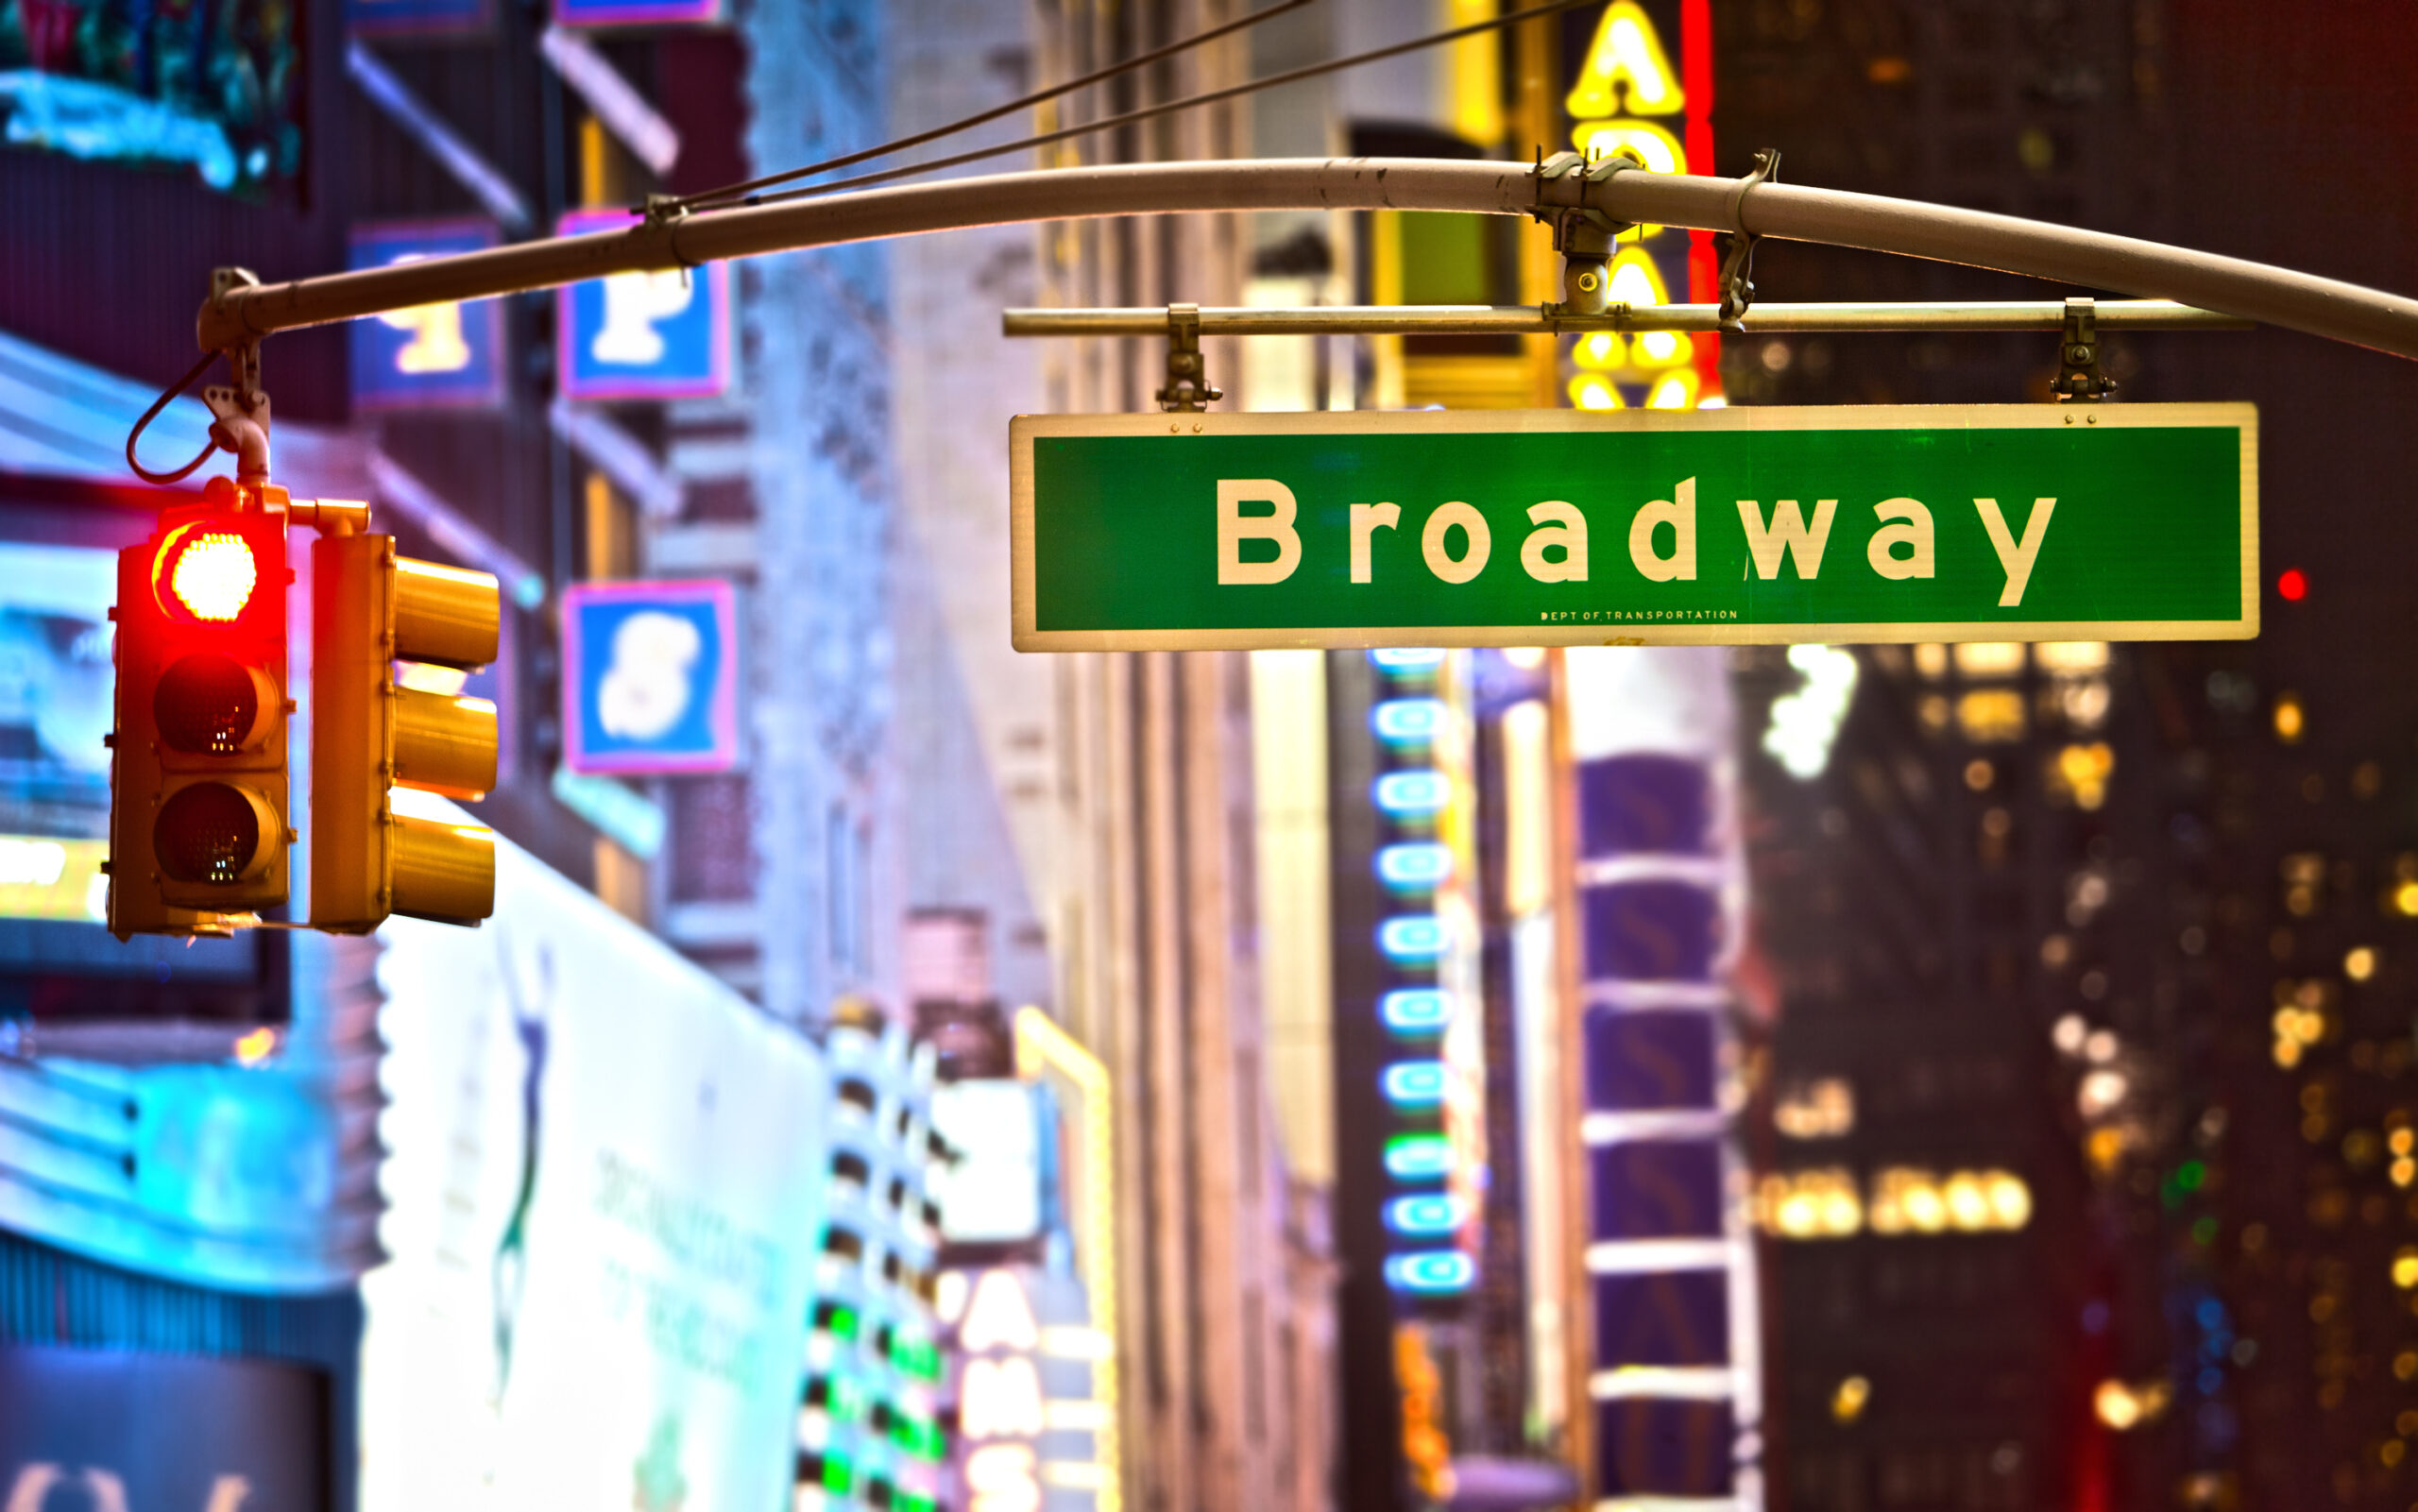 “Save Live Broadway”